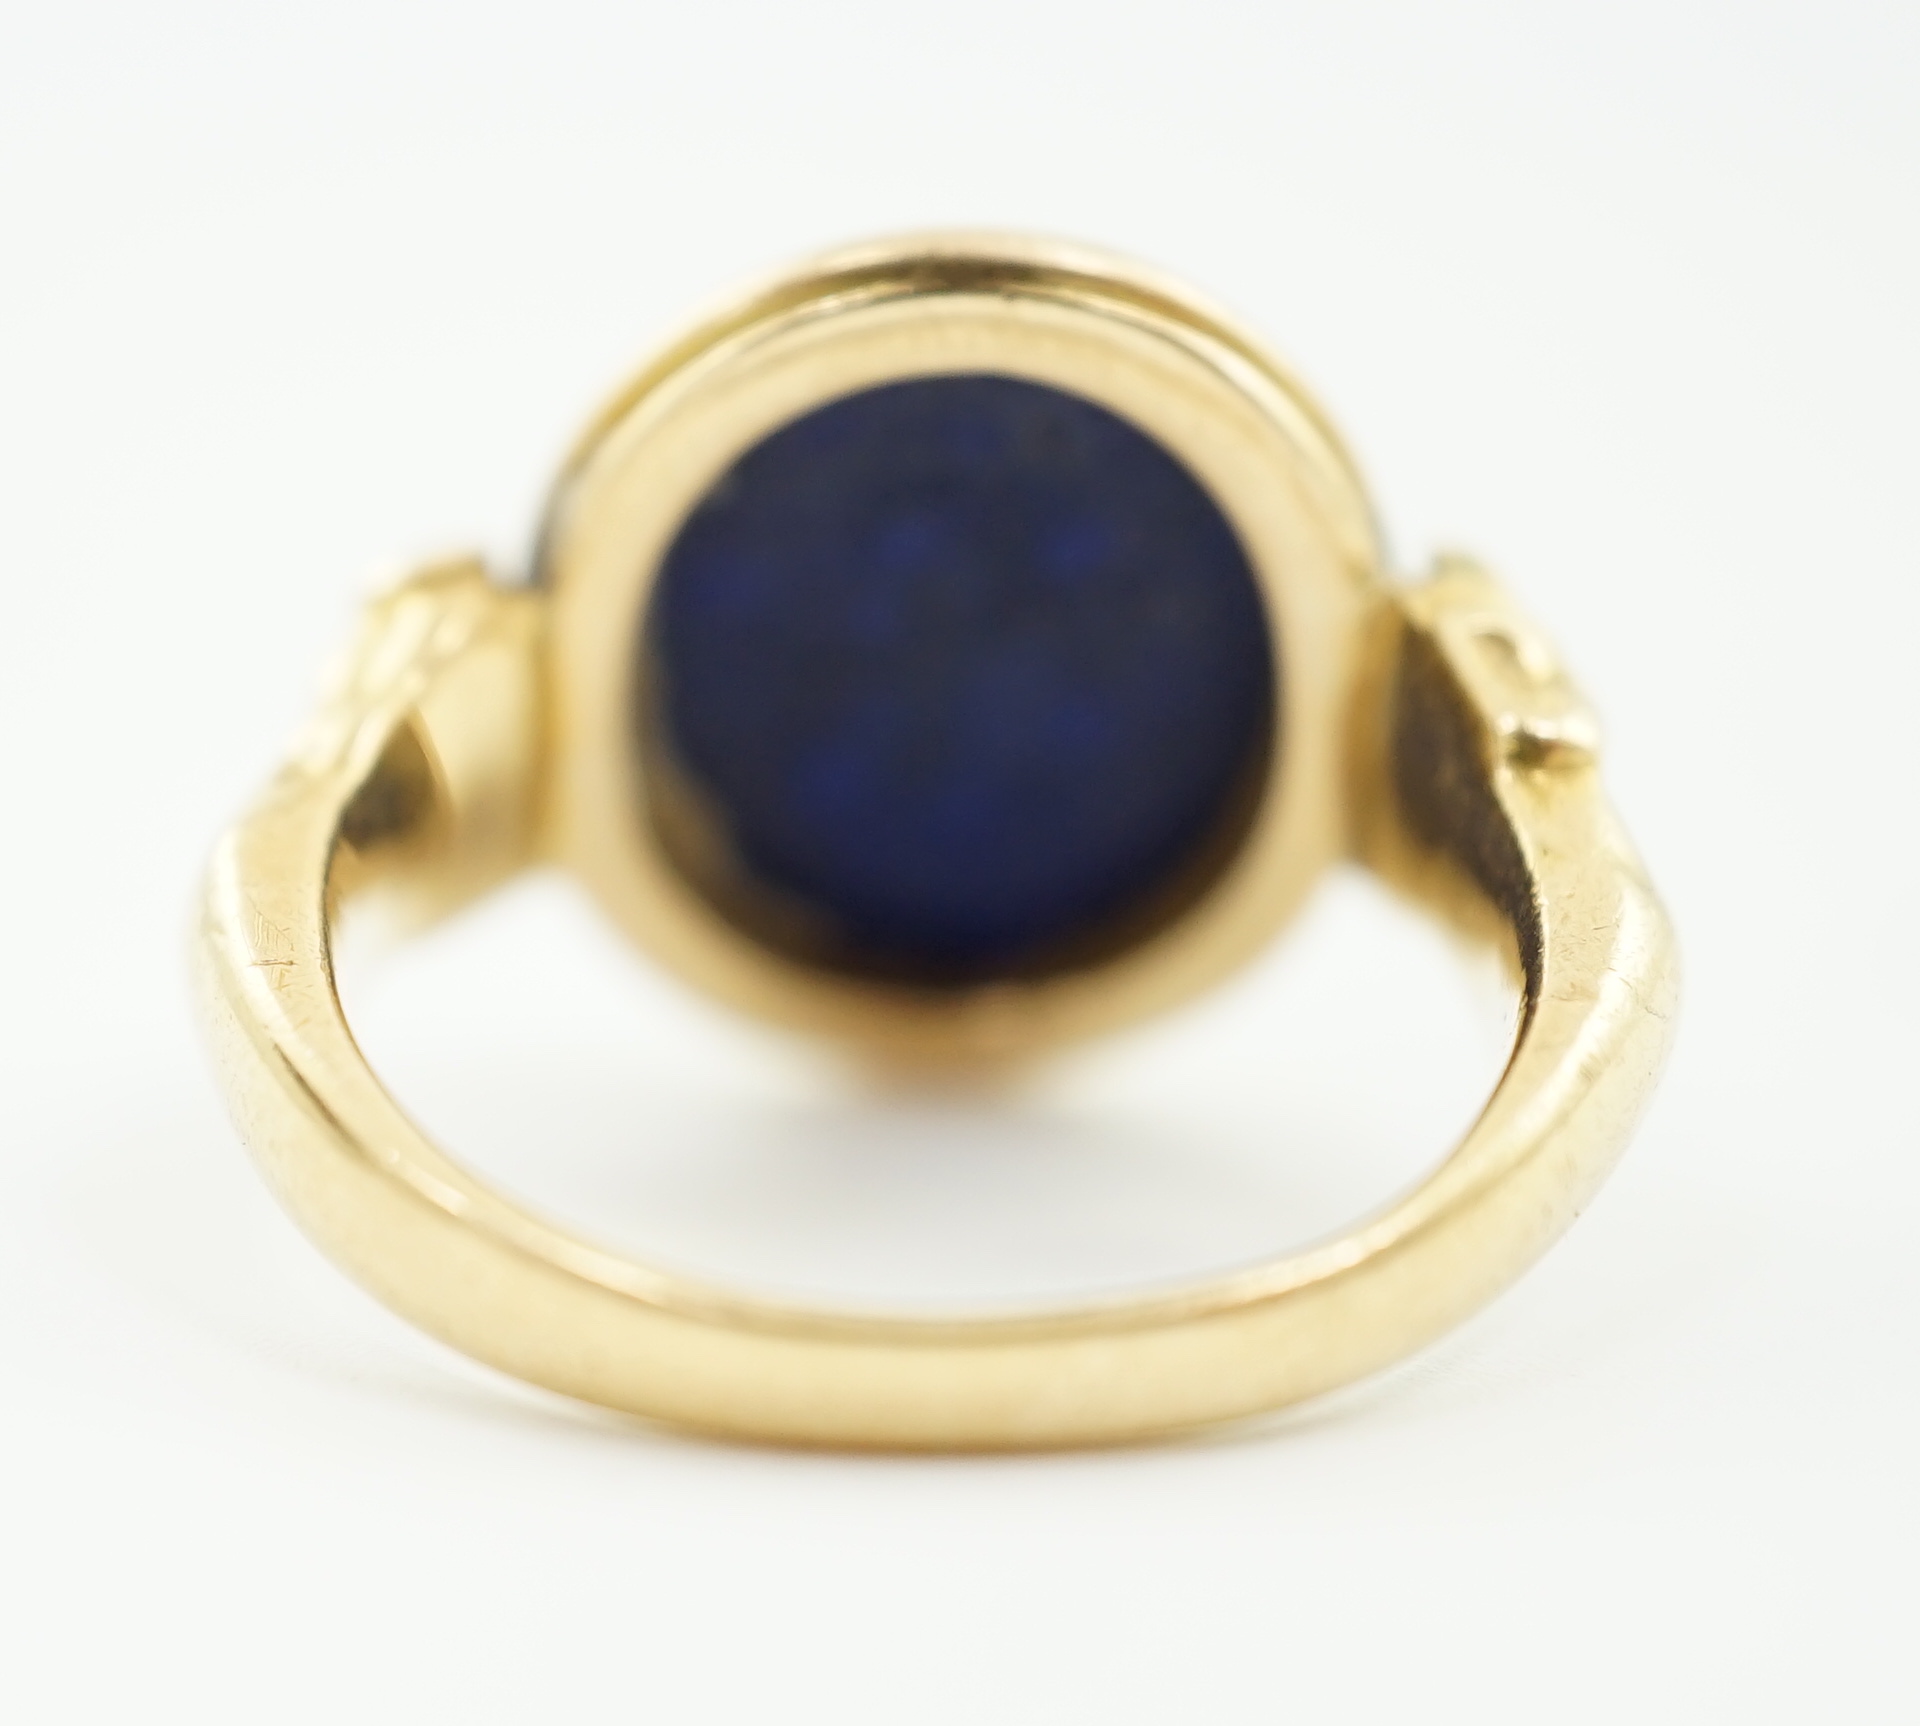 A 19th century gold and lapis lazuli set intaglio ring